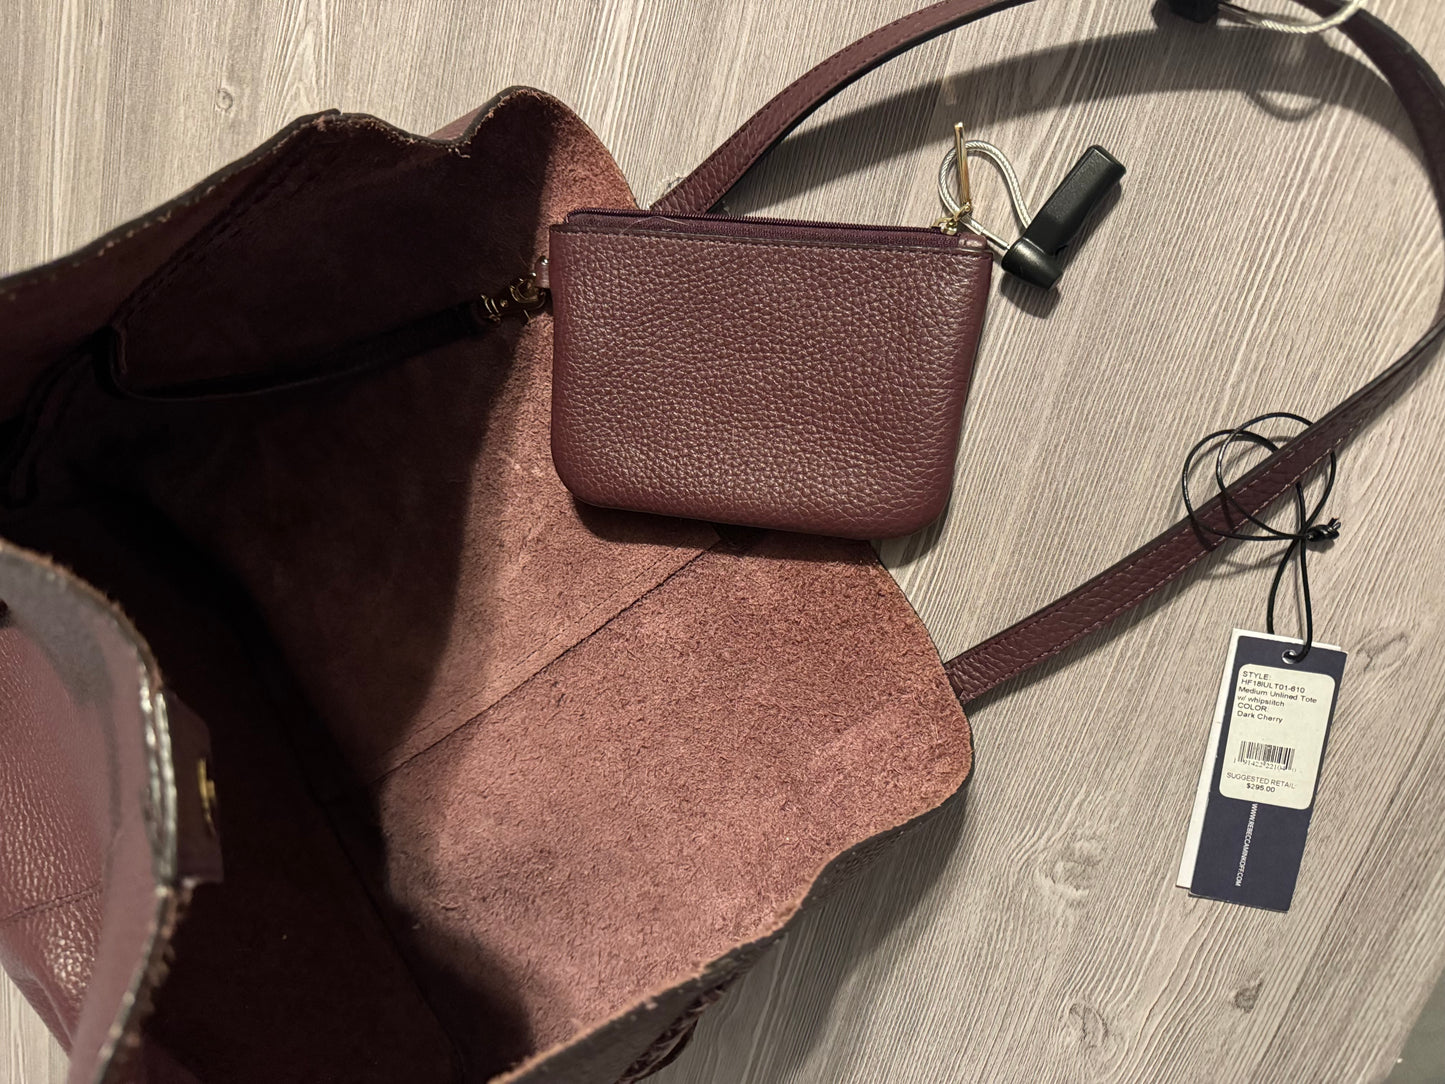 Handbag By Rebecca Minkoff  Size: Large